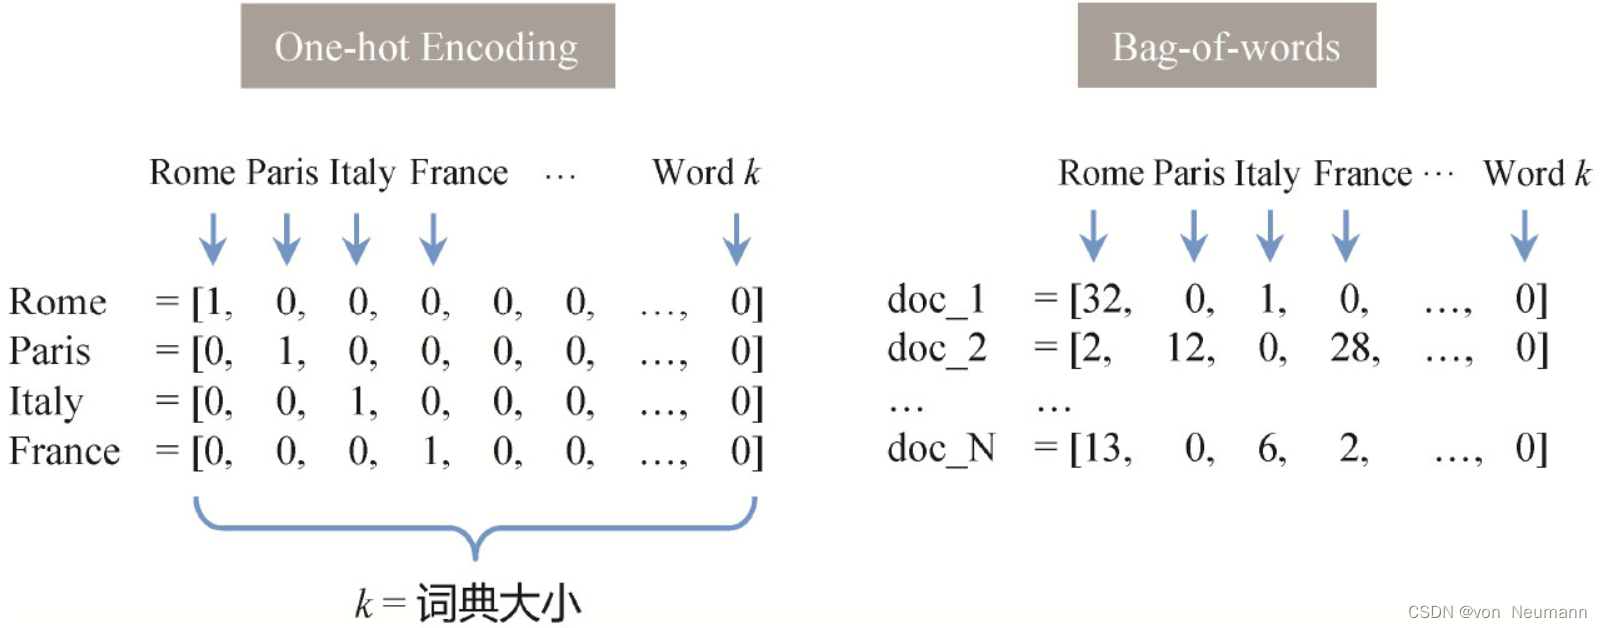 One-hot Encoding和词袋模型